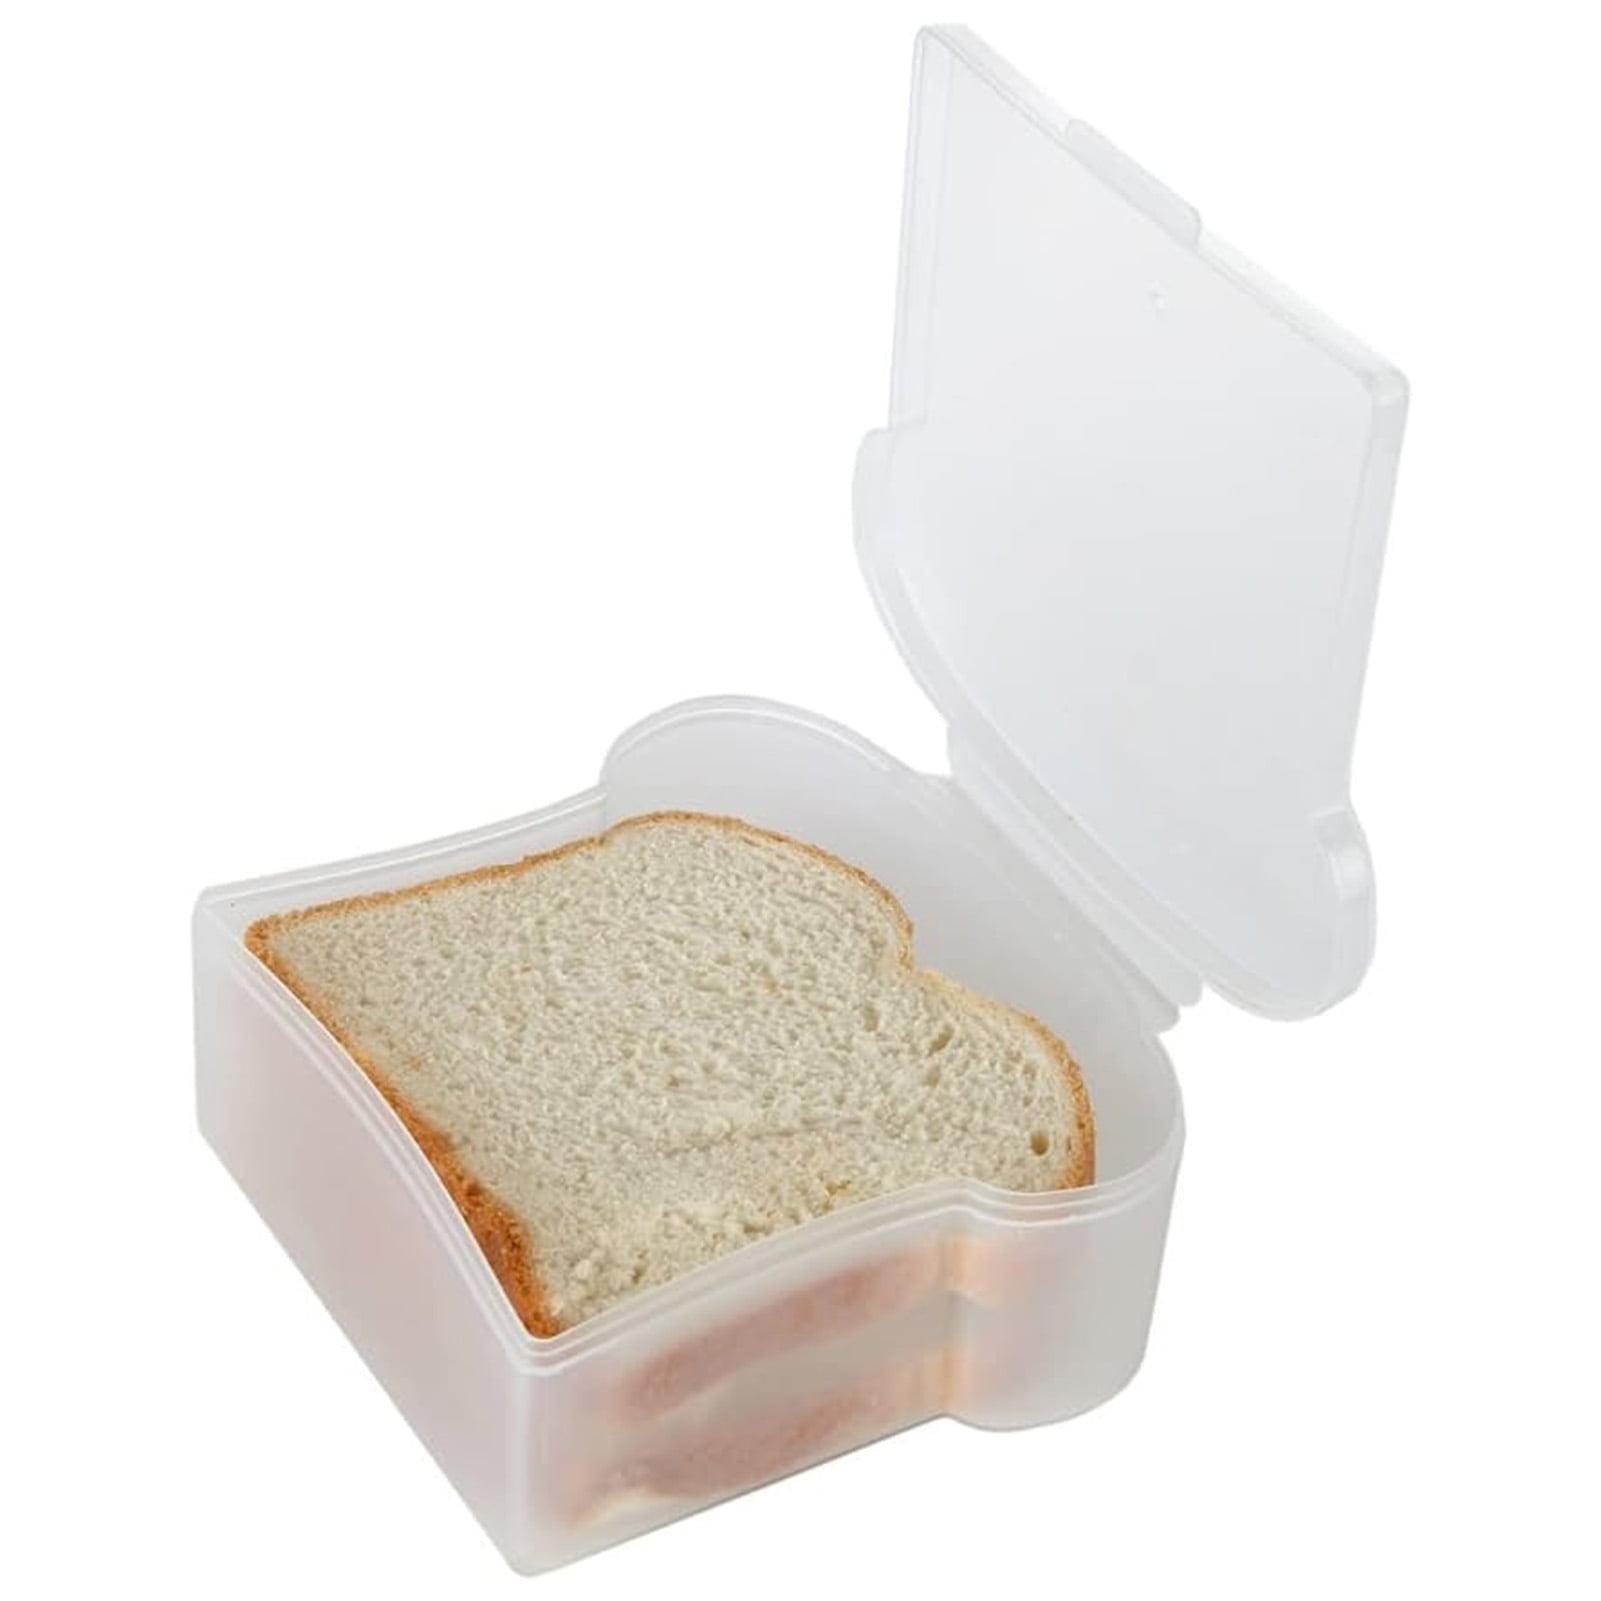 Walbest Toast Shape Sandwich Box Food Storage Sandwich Containers Lunch  Containers White Kids or Adult Sandwich Holder Microwave and Freezer Safe  Toast Holder Lunch Box for Meal Lunch Prep 